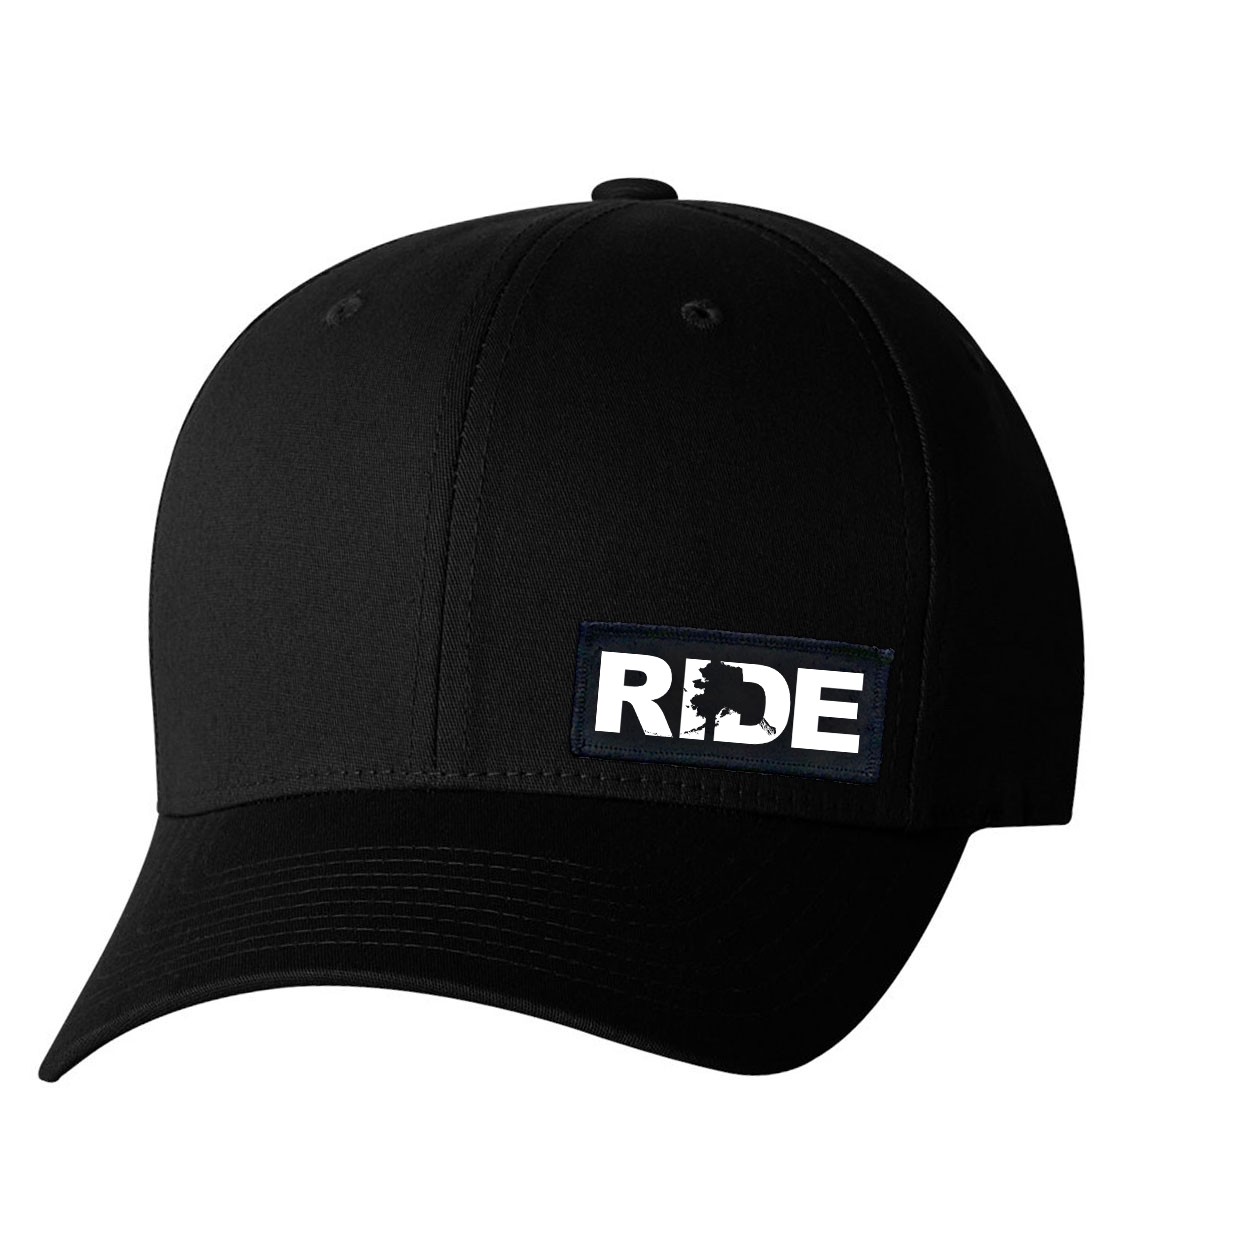 Ride Alaska Night Out Woven Patch Flex-Fit Hat Black (White Logo)